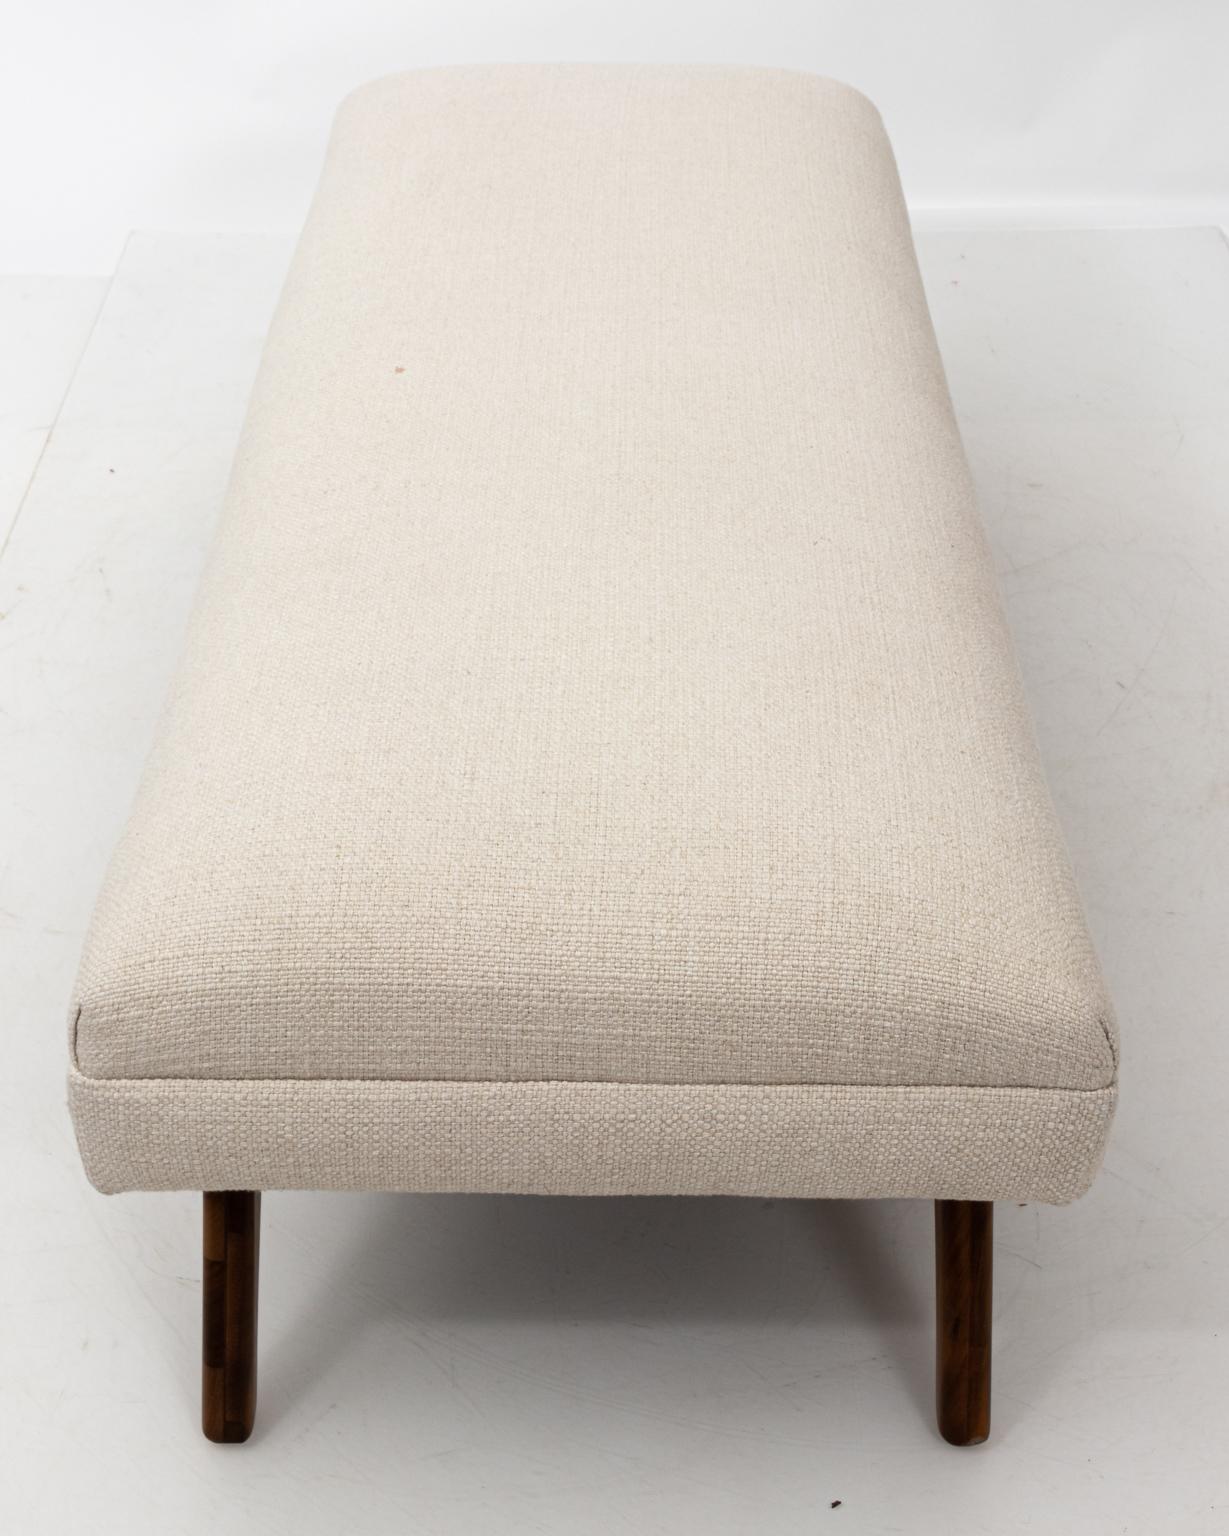 Upholstery White Upholstered Mid-Century Modern Style Bench